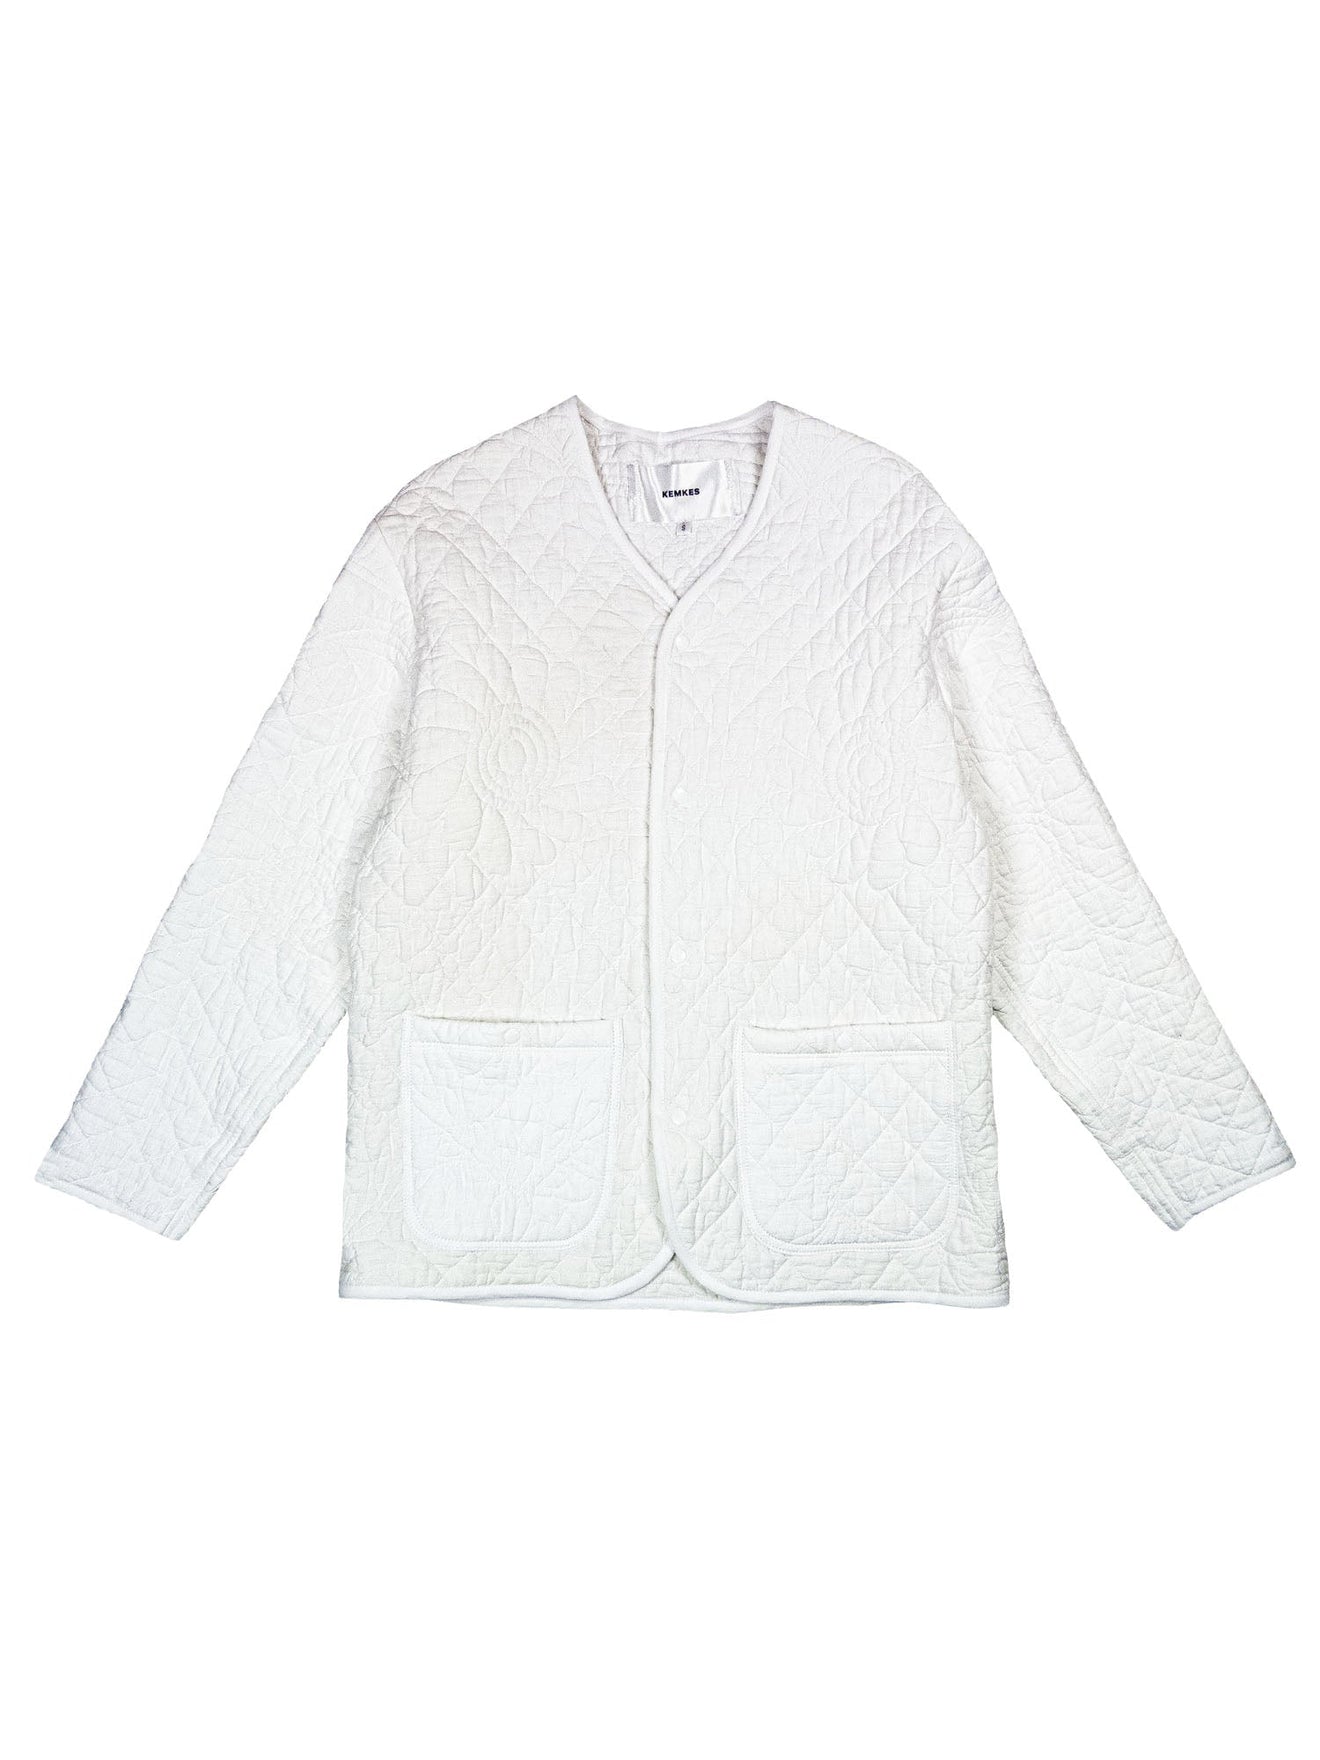 Kemkes White Quilt Jacket S